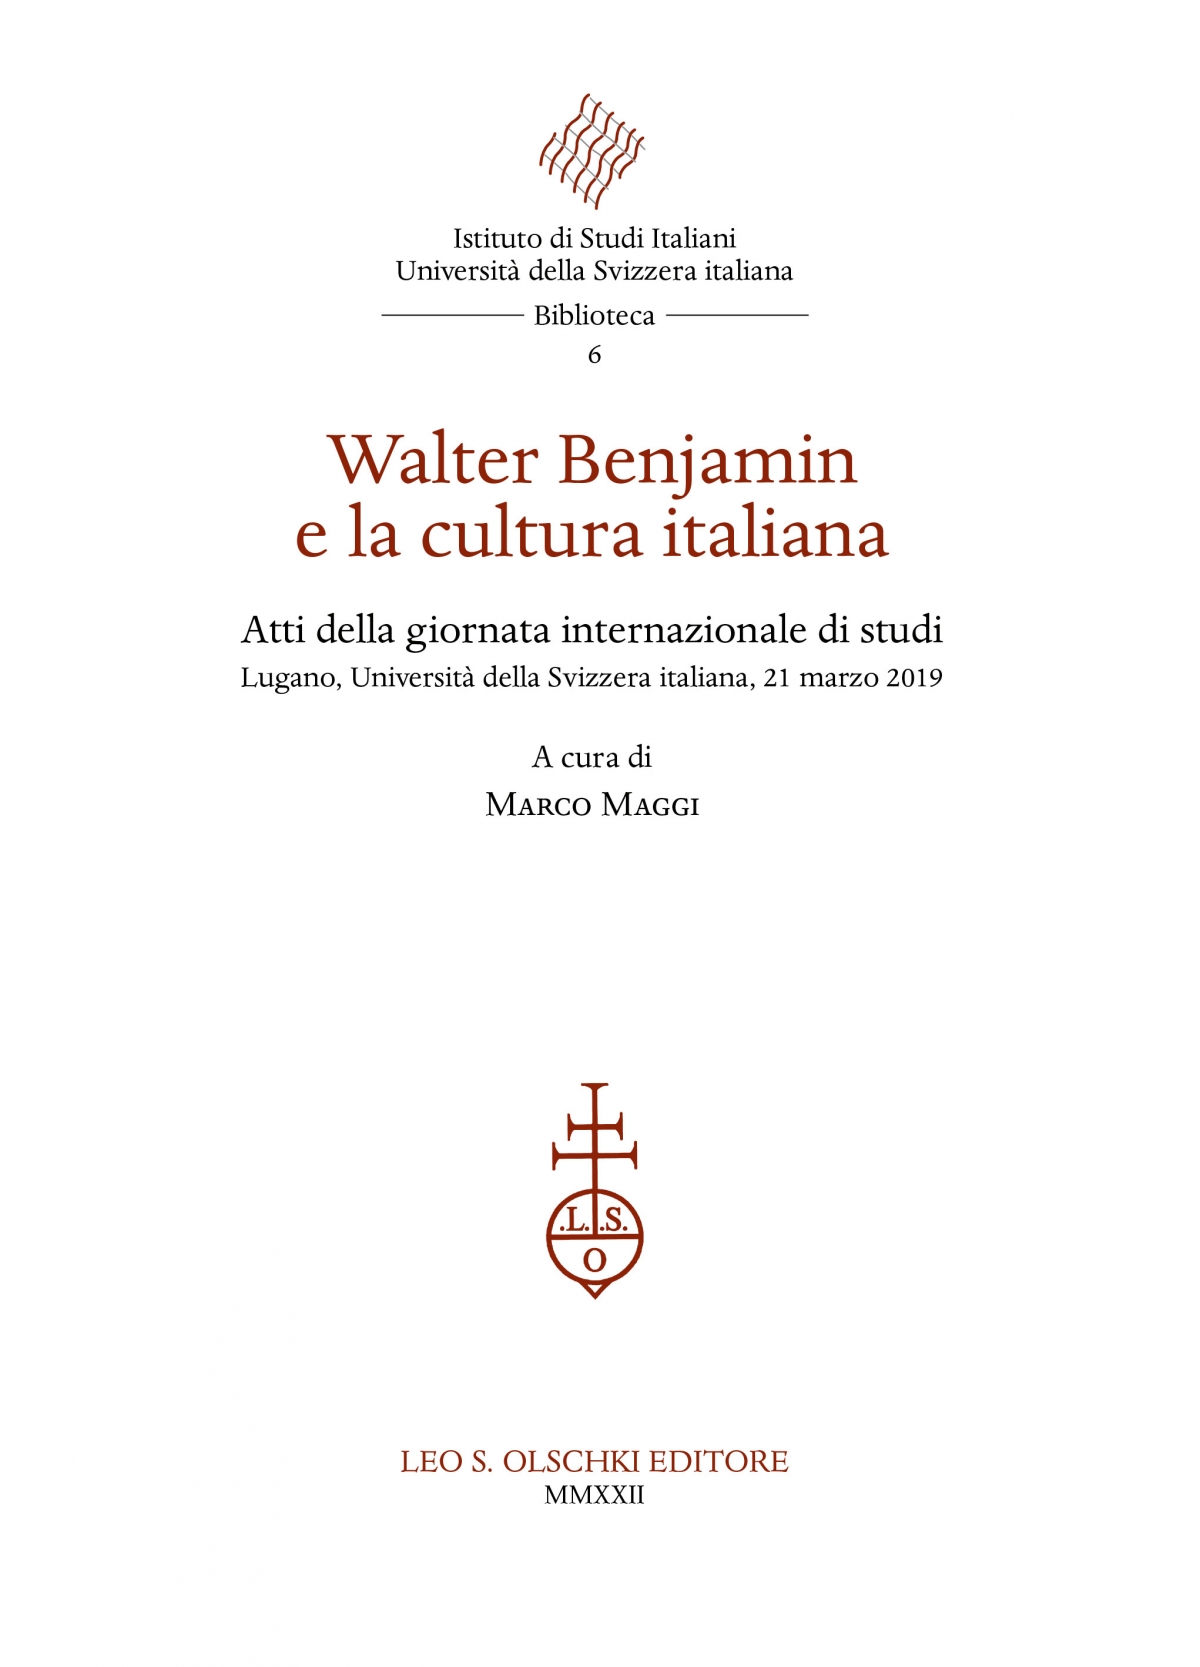 Walter Benjamin e la cultura italiana